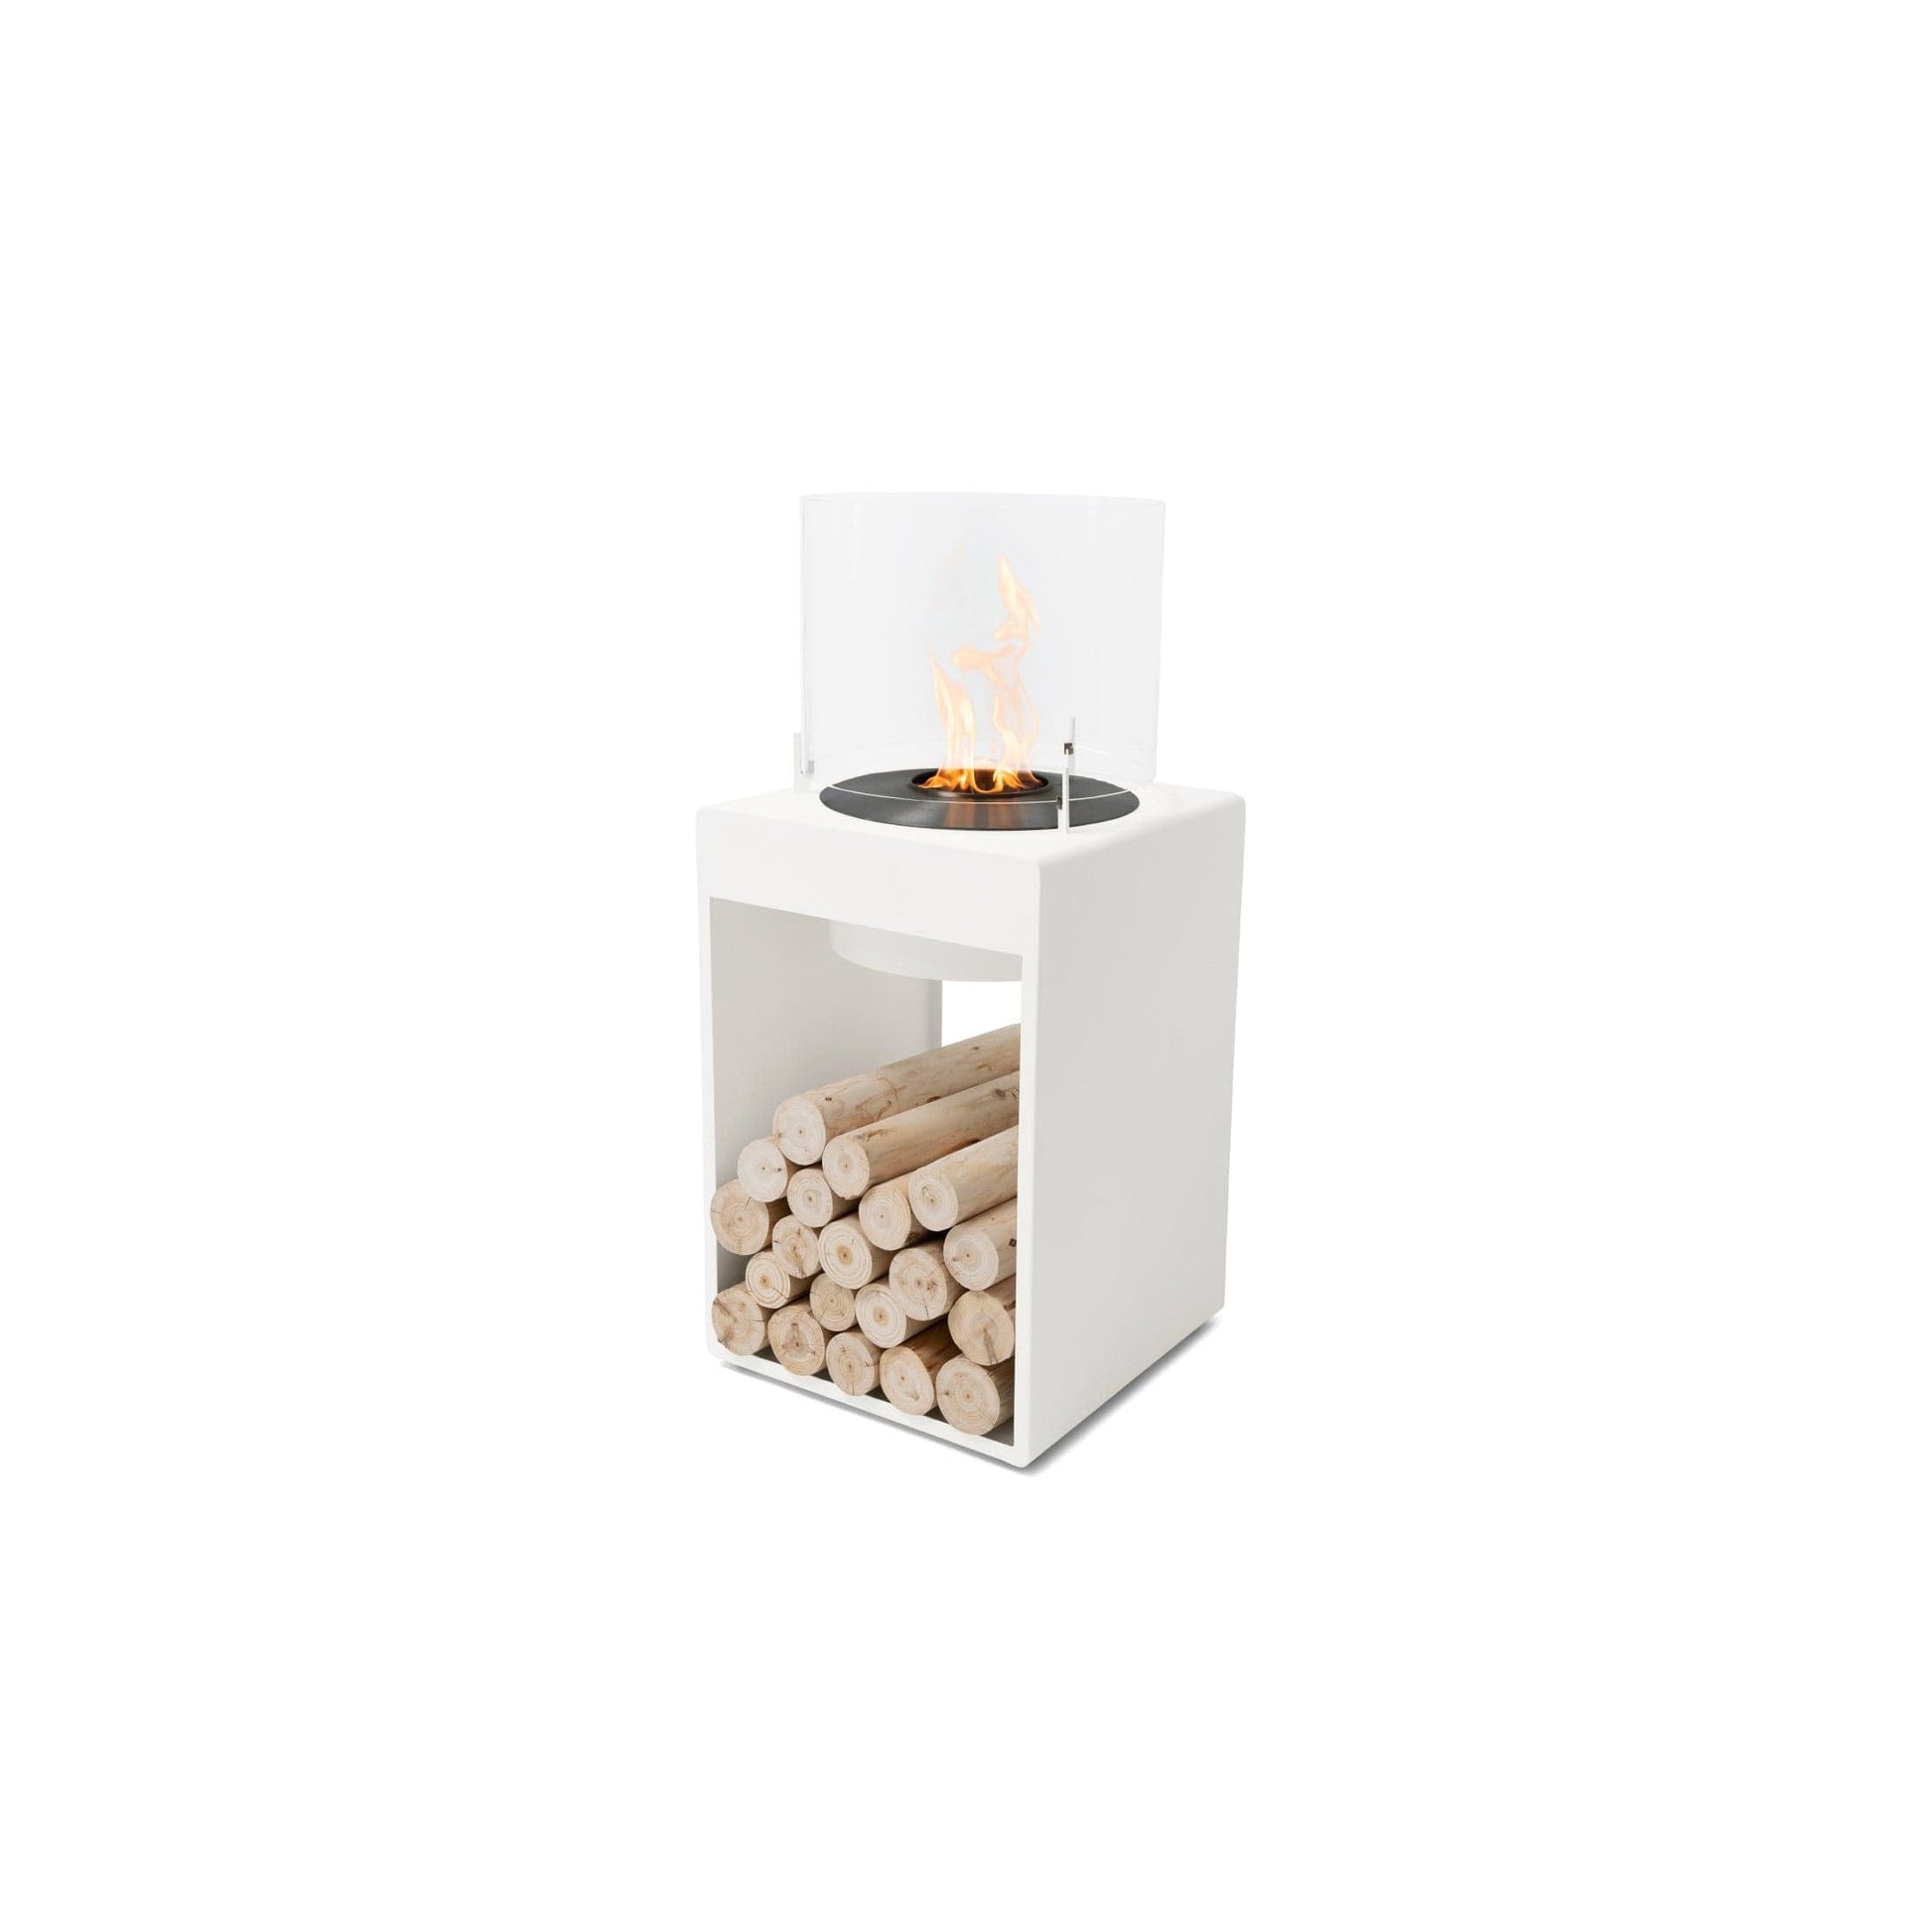 EcoSmart Fire POP 8T 39" White Freestanding Designer Fireplace with Black Burner by MAD Design Group